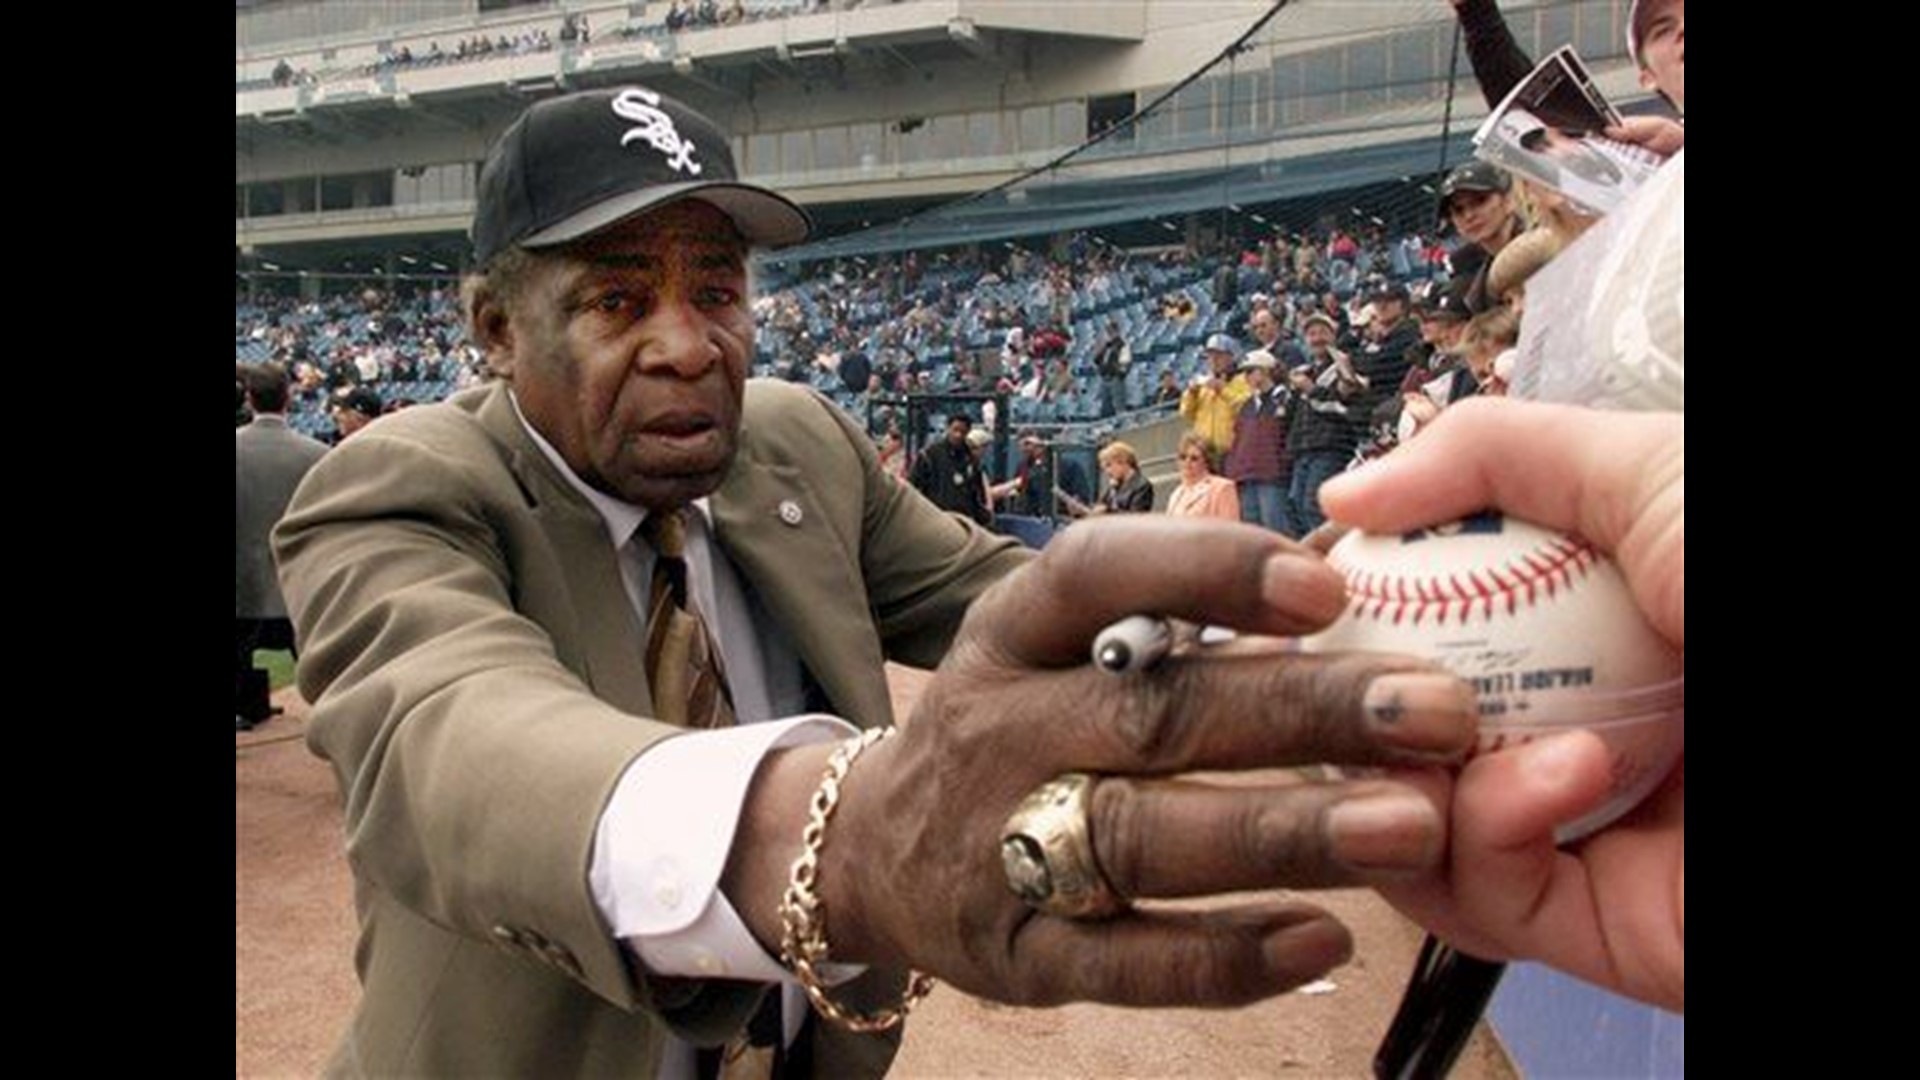 Major league baseball's 1st black Latino star Minoso dies